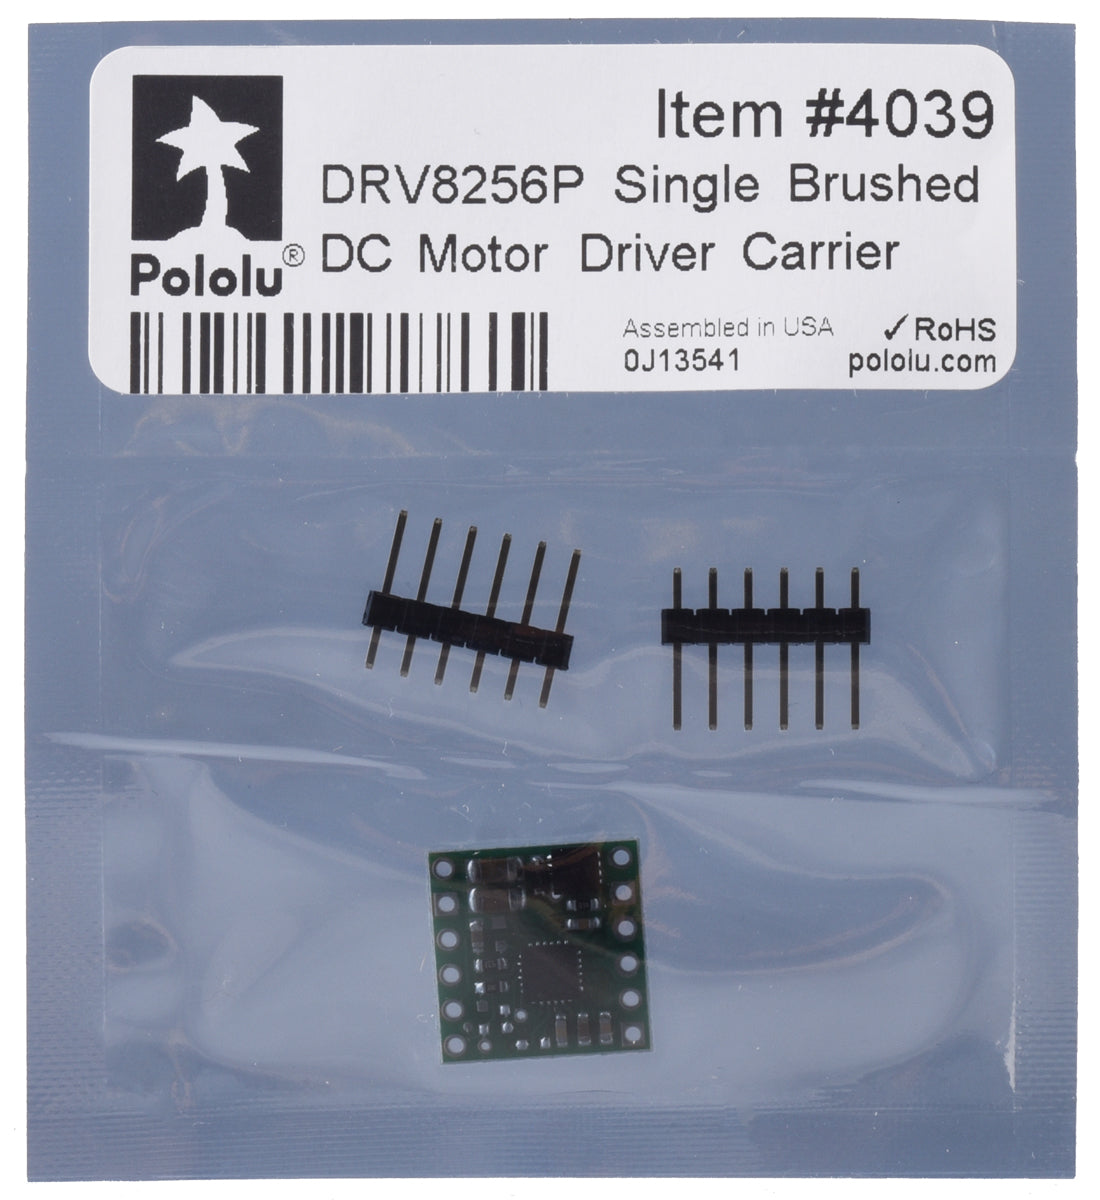 DRV8256P Single Brushed DC Motor Driver Carrier